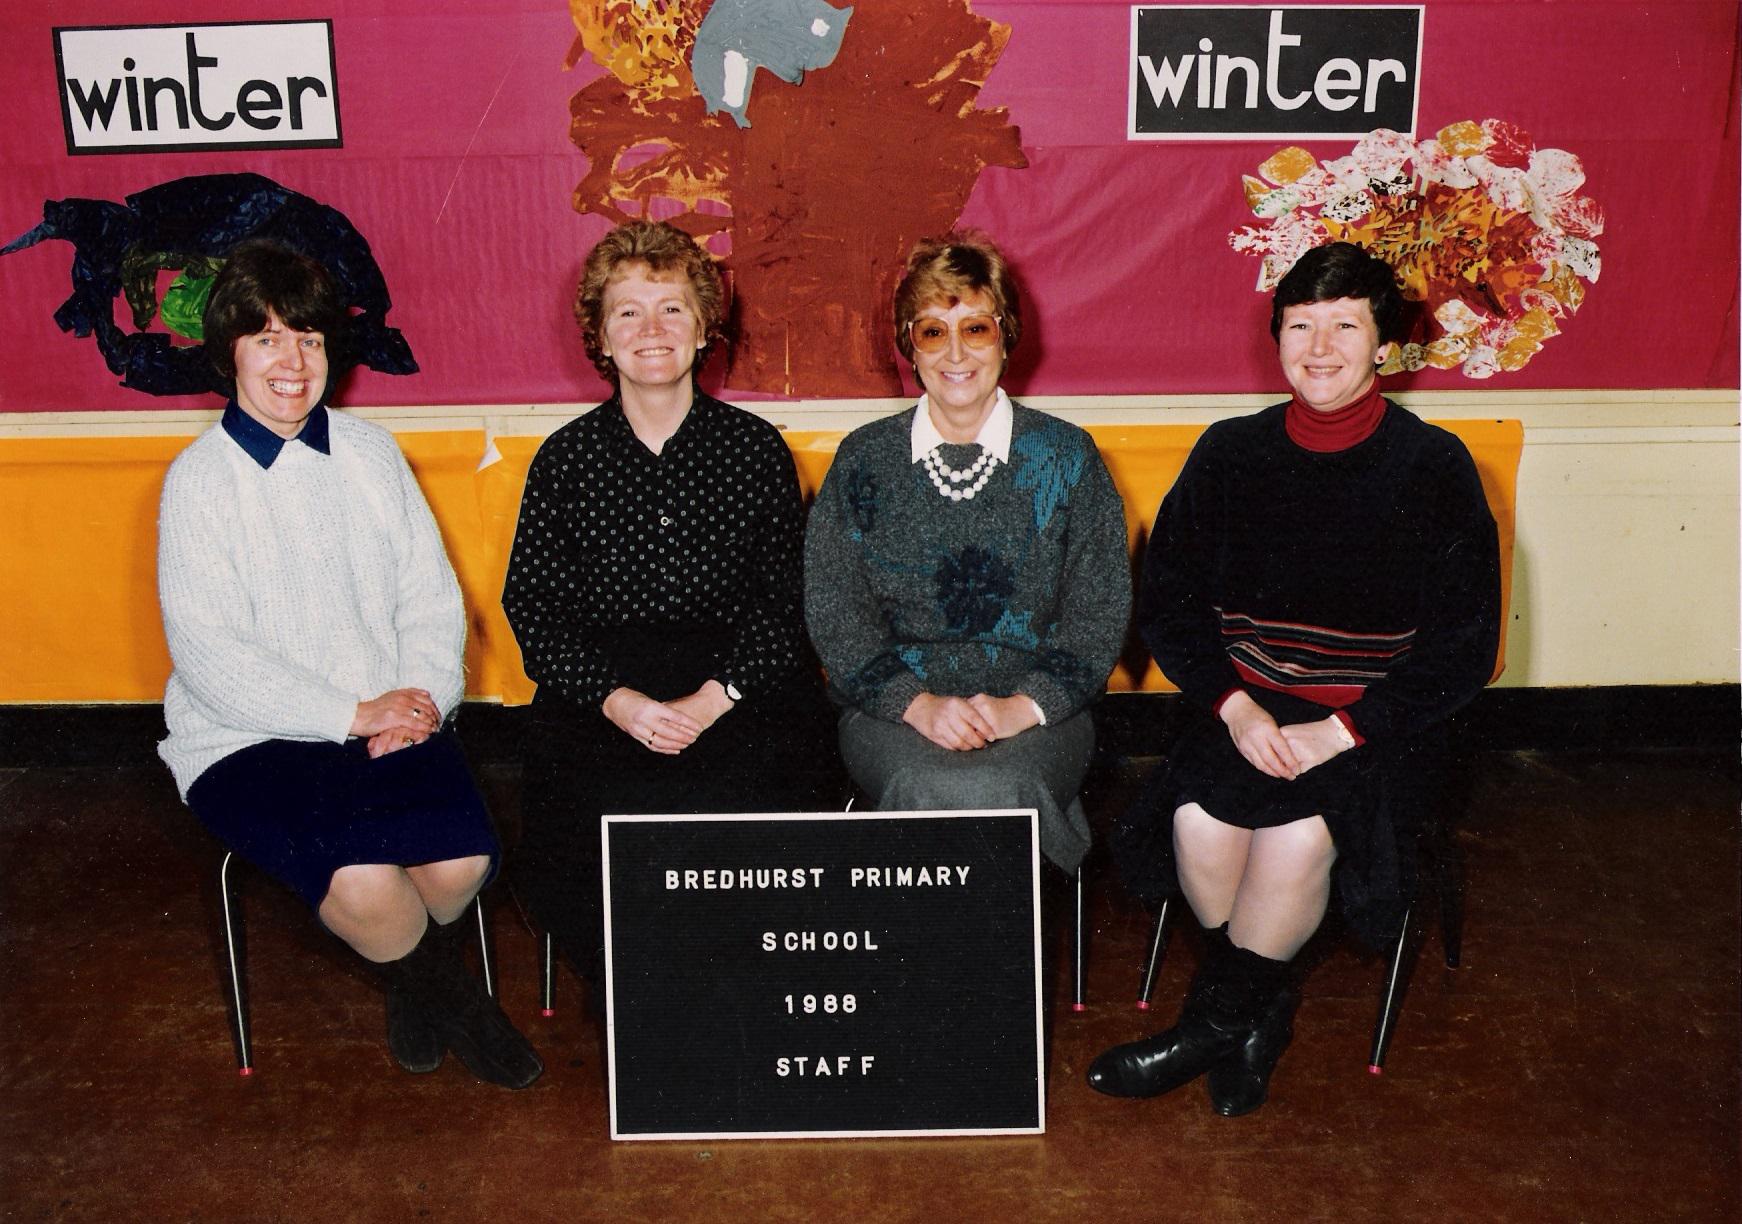 1988 - Bredhurst School Staff